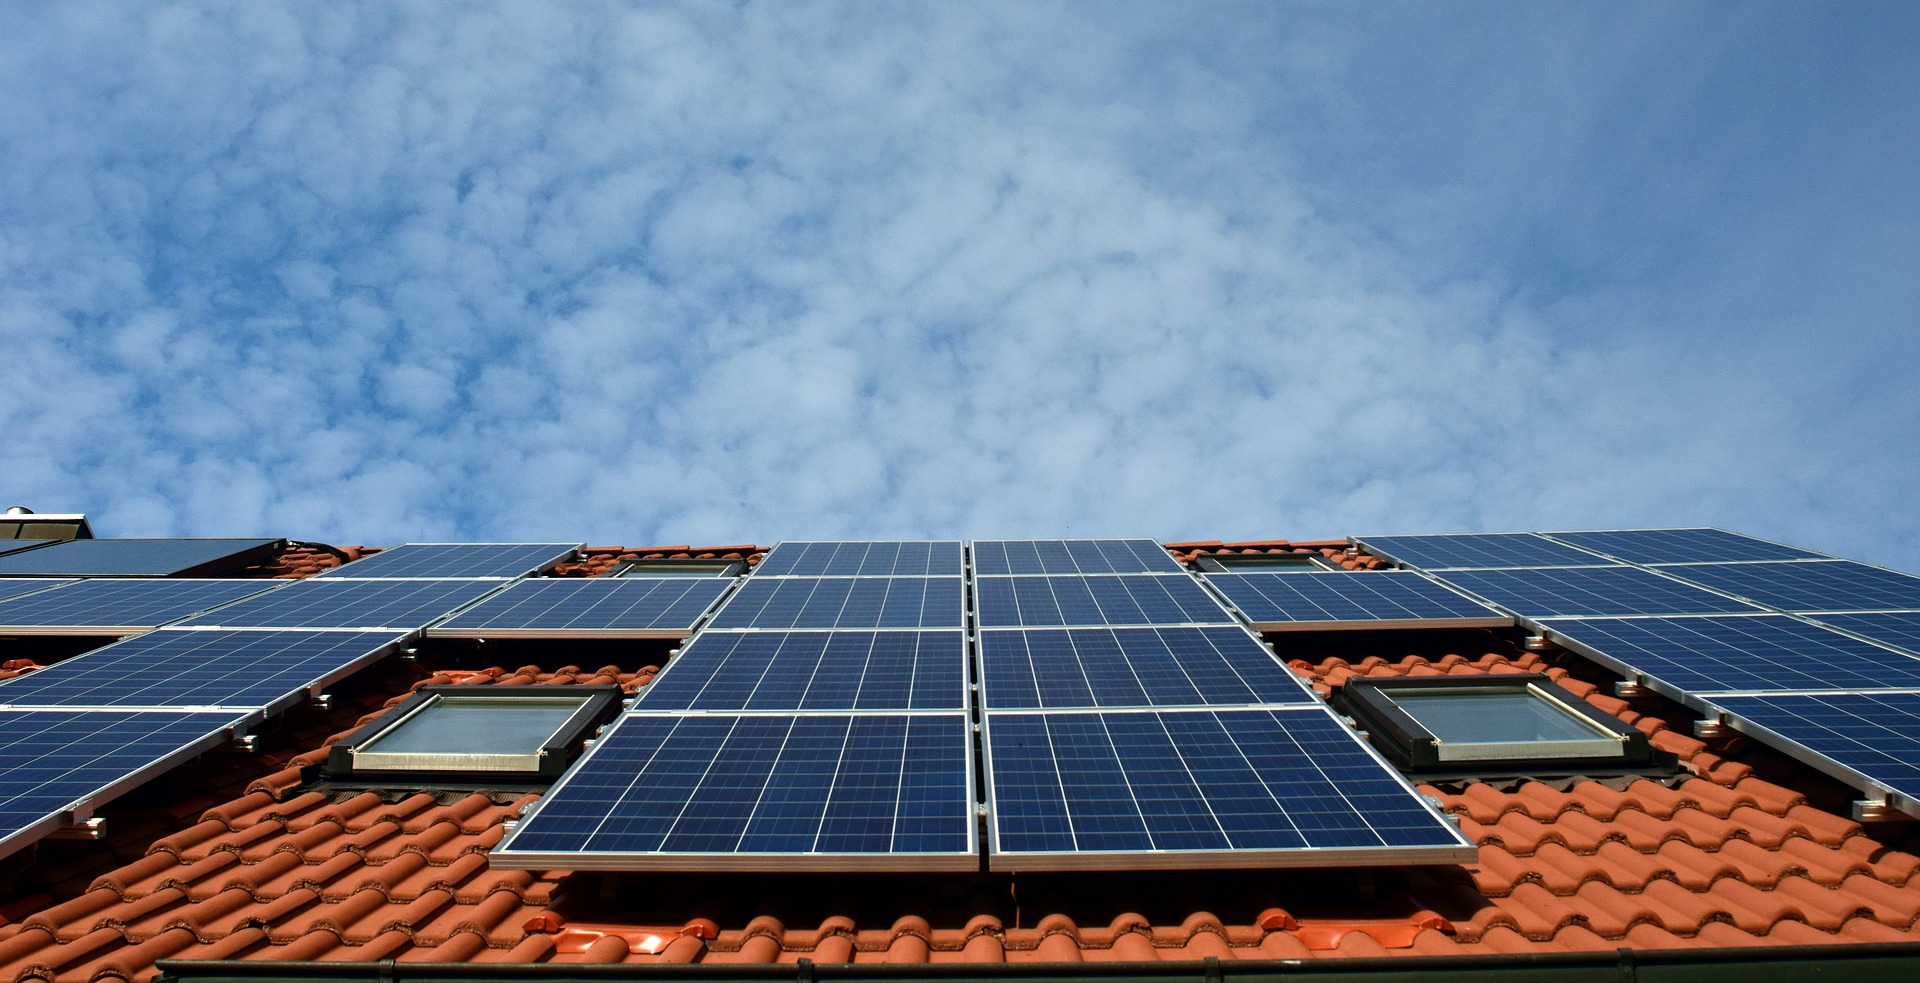 Solar Panels on title roof in San Marino